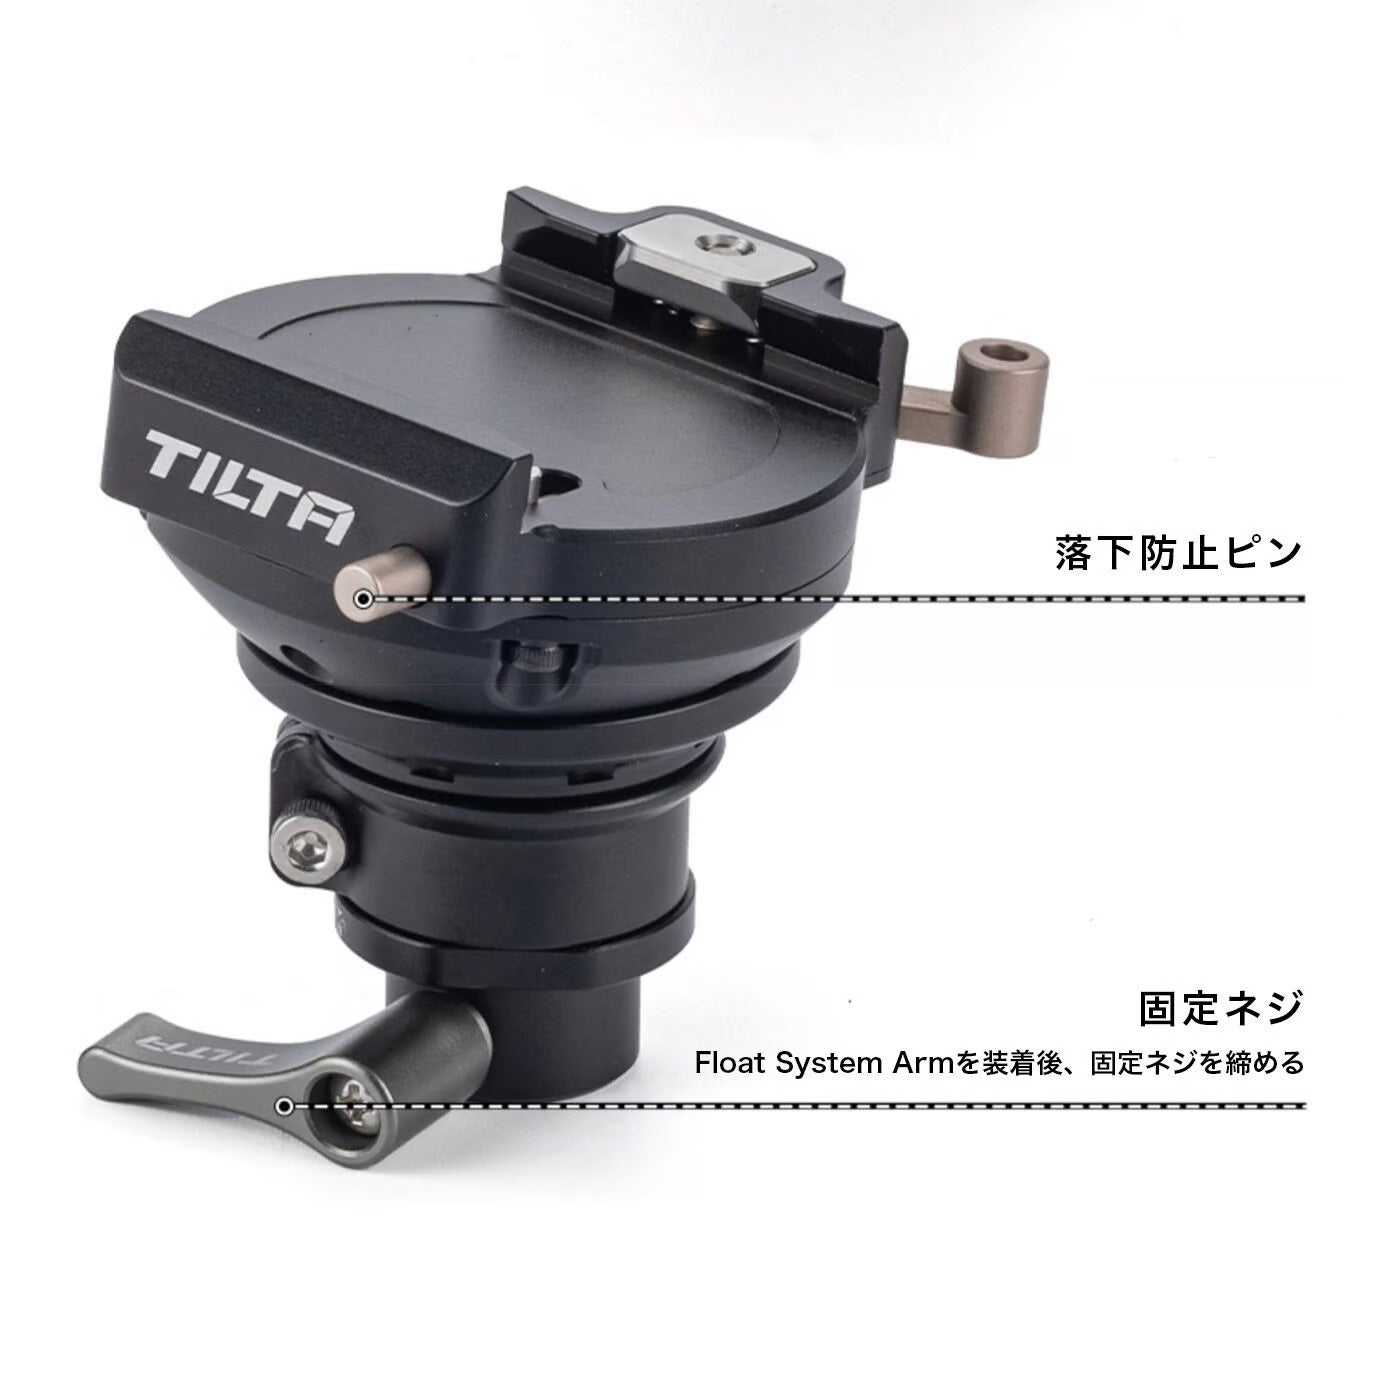 TILTA(ティルタ) Tilta Float Handheld Support System GSS-T02